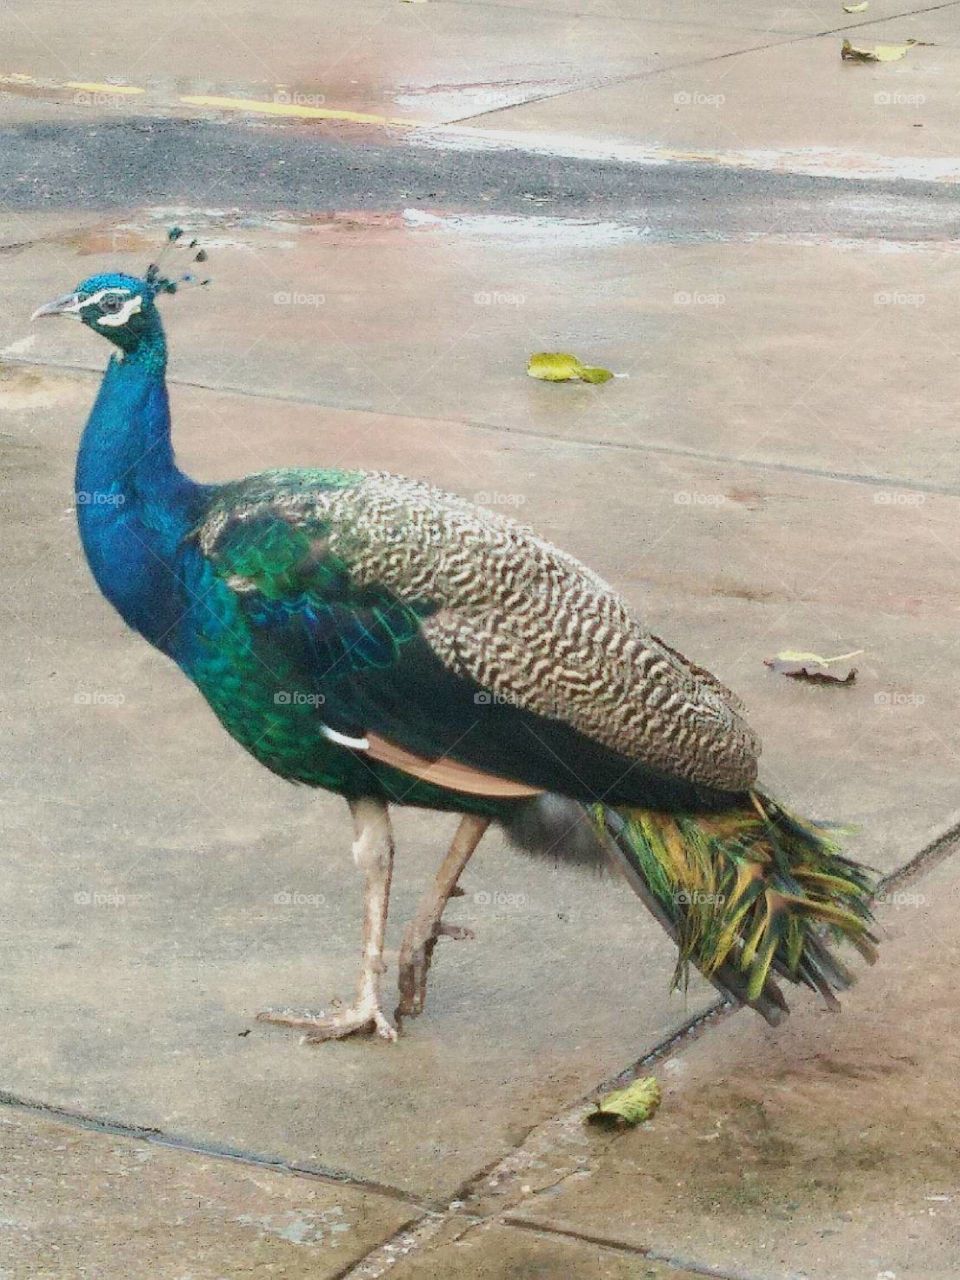 Peacock in Lopburi, Thailand.